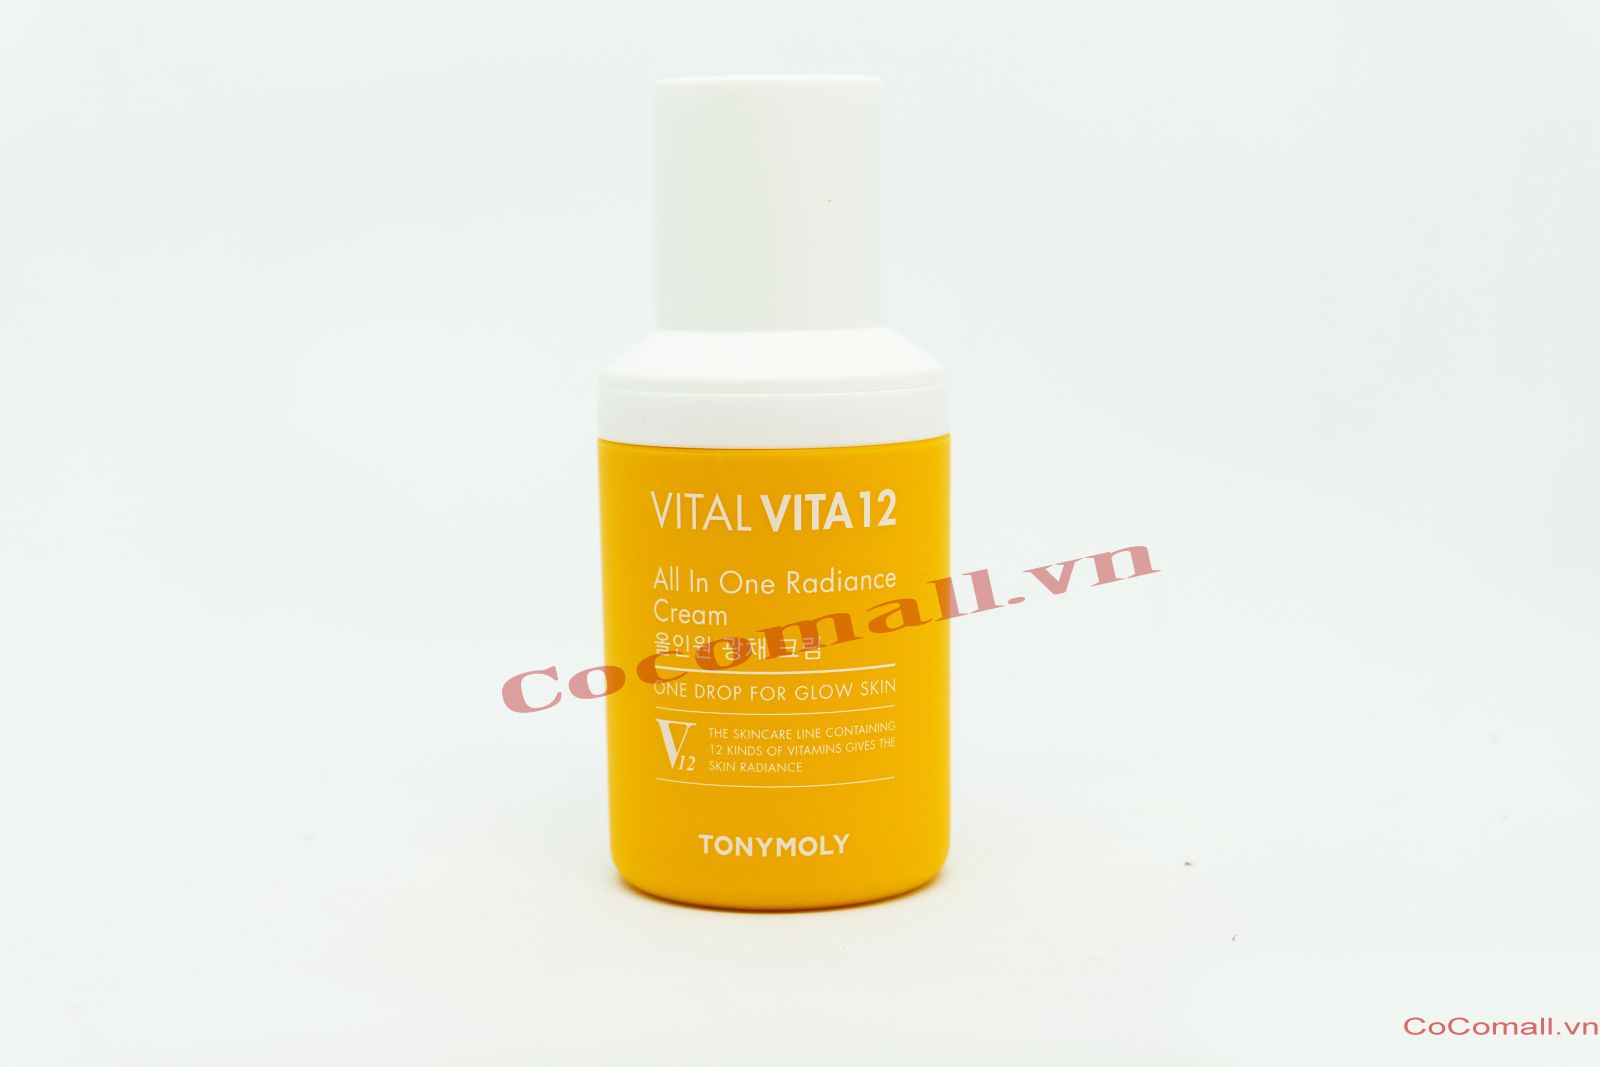 VITAL VITA 12 SYNERGY ALL IN ONE RADIANCE CREAM (kem dưỡng da nhiều vitamin 